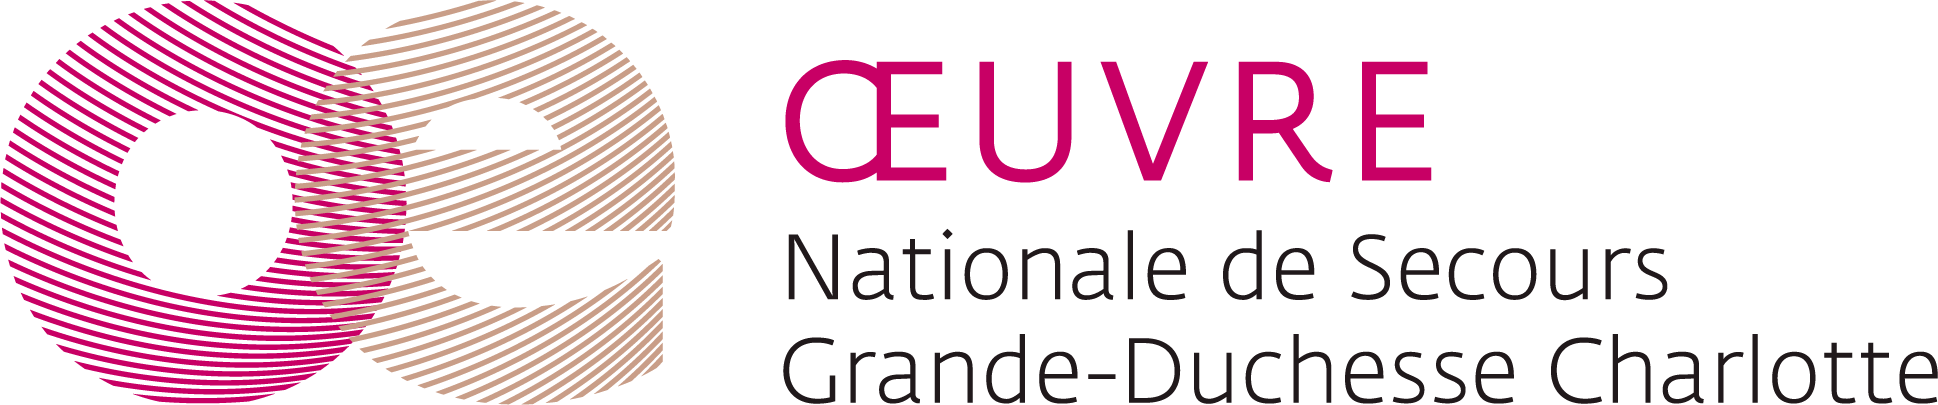 oeuvre logo